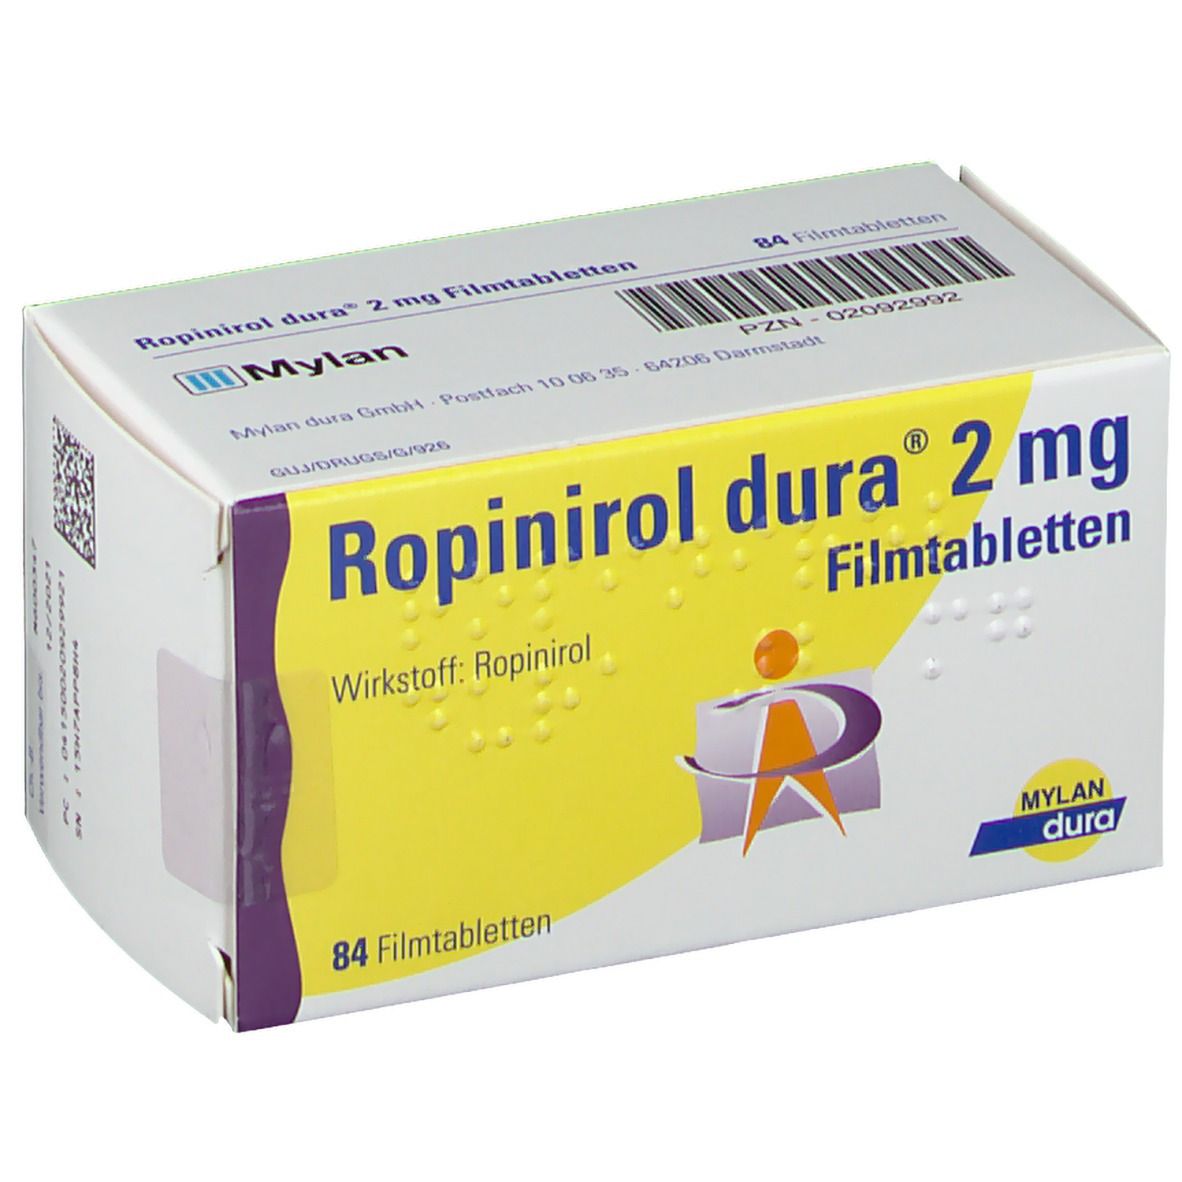 Ropinirol dura® 2 mg